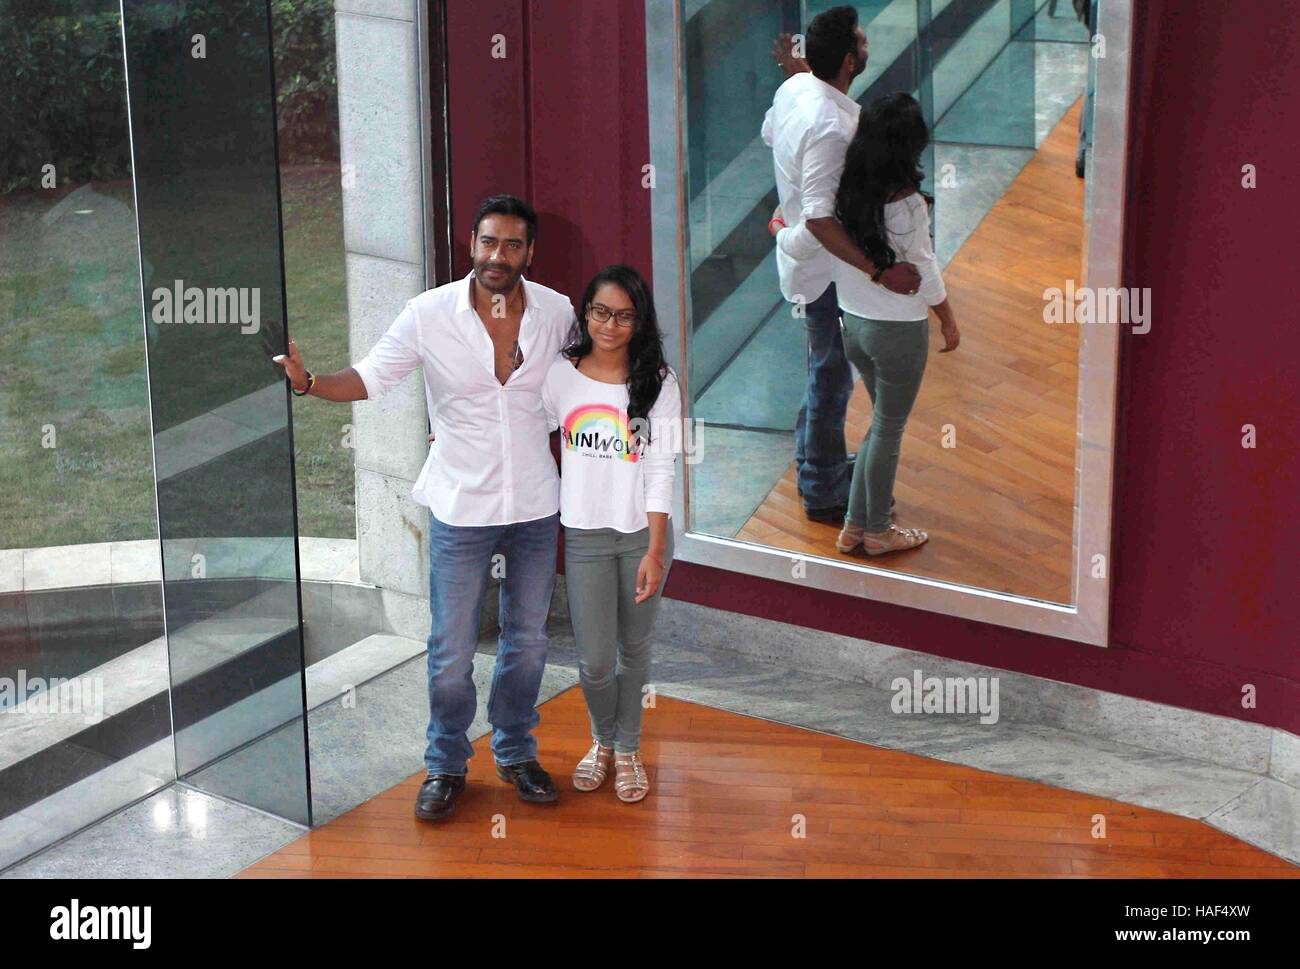 Bollywood-Schauspieler Ajay Devgn Tochter Nysa Pressekonferenz Smile Foundation verkünden neue CampaignShe können fliegen "Mumbai Stockfoto